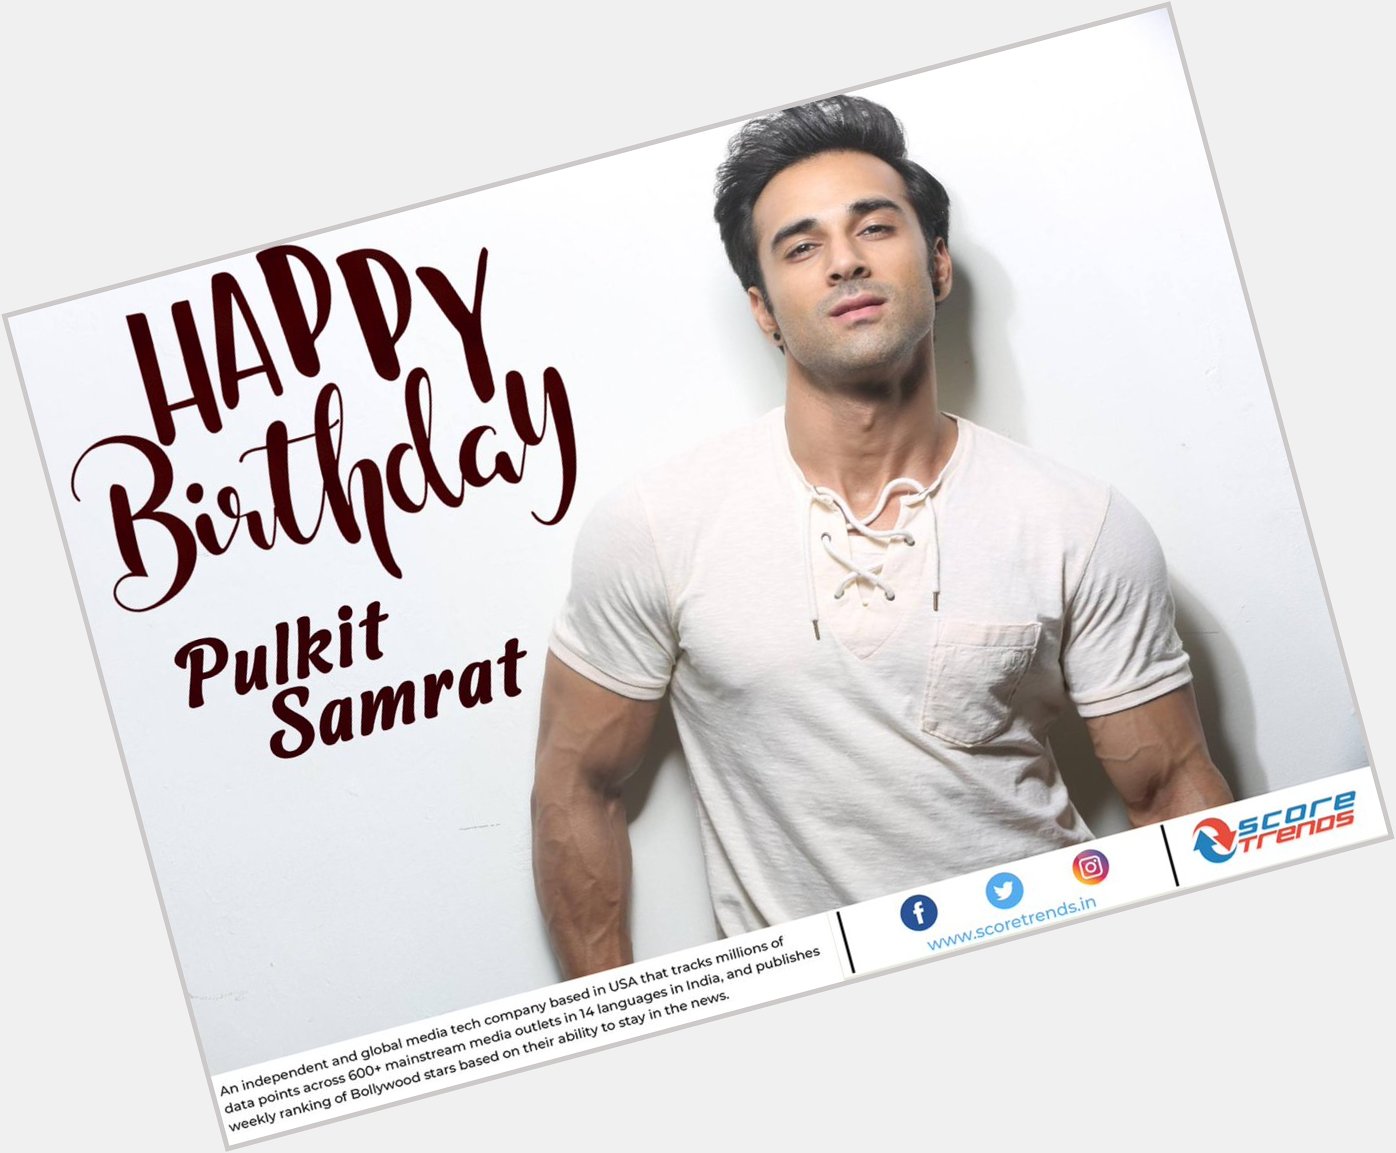 Score Trends wishes Pulkit Samrat a Happy Birthday!! 